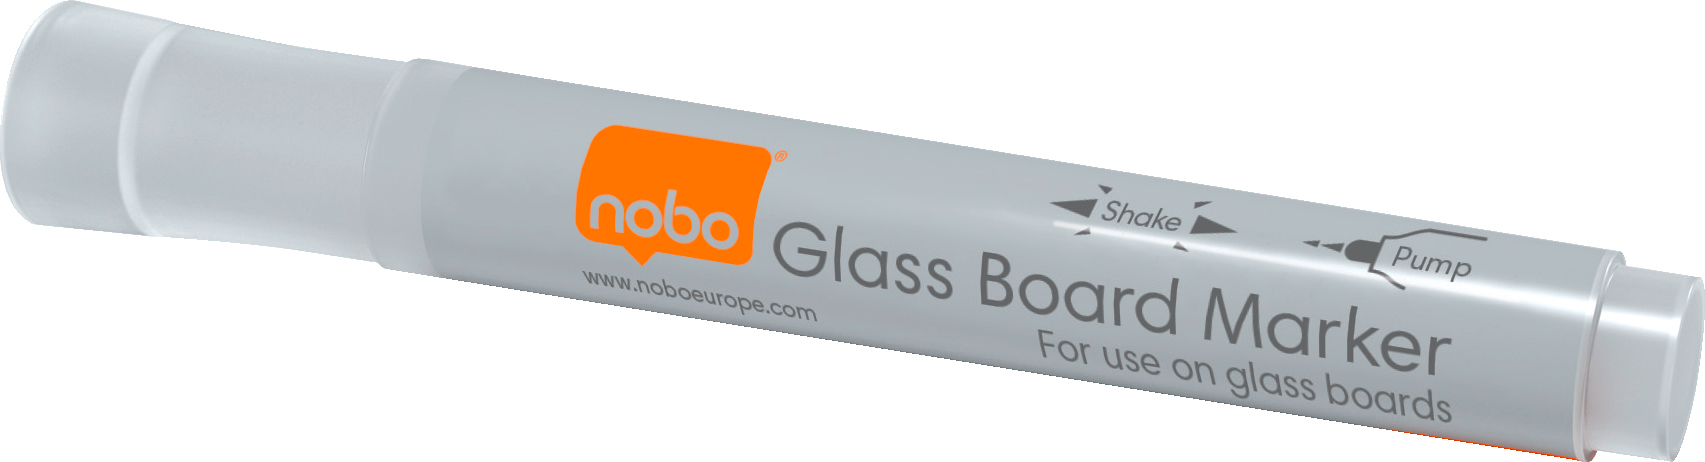 NOBO Glassboard-Marker 1905323 blanc 4 pcs.